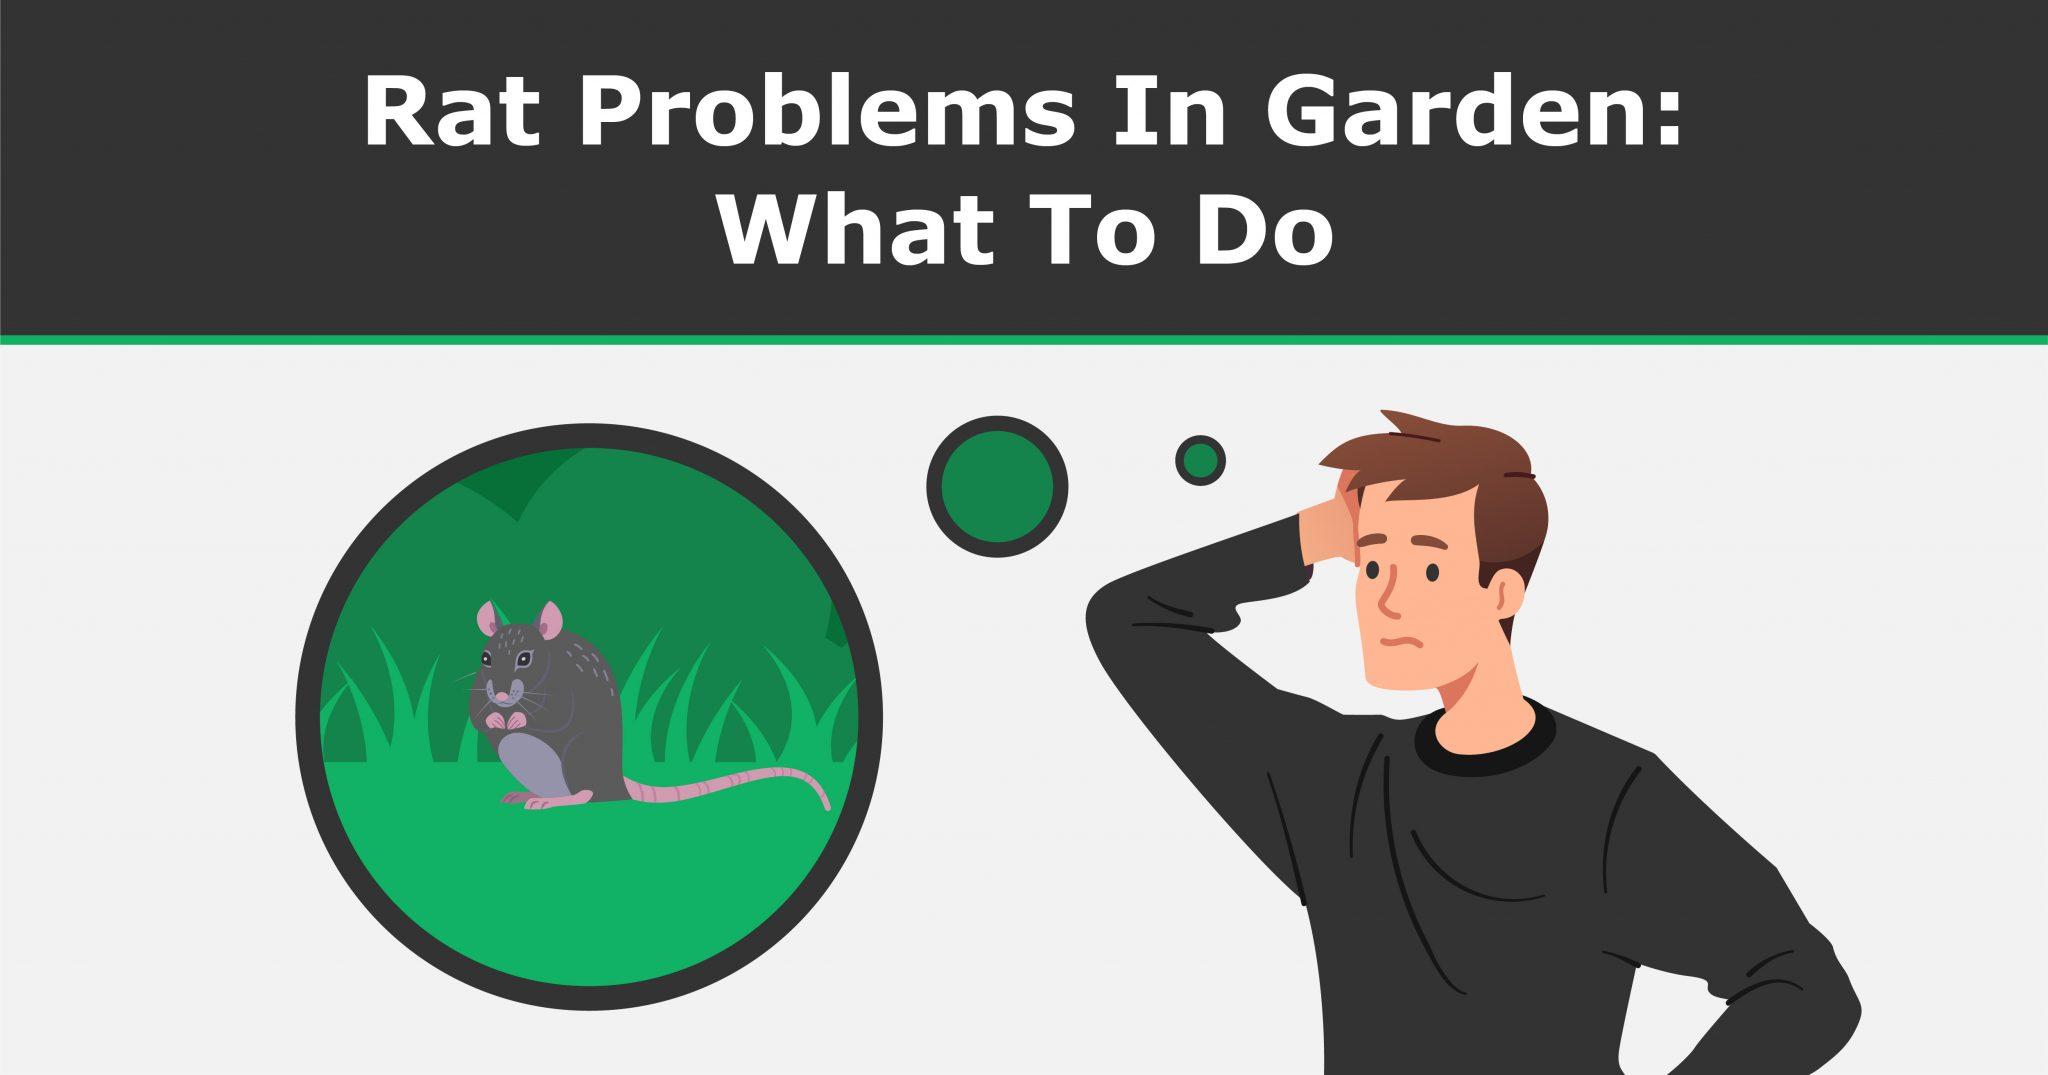 Rat problems in garden